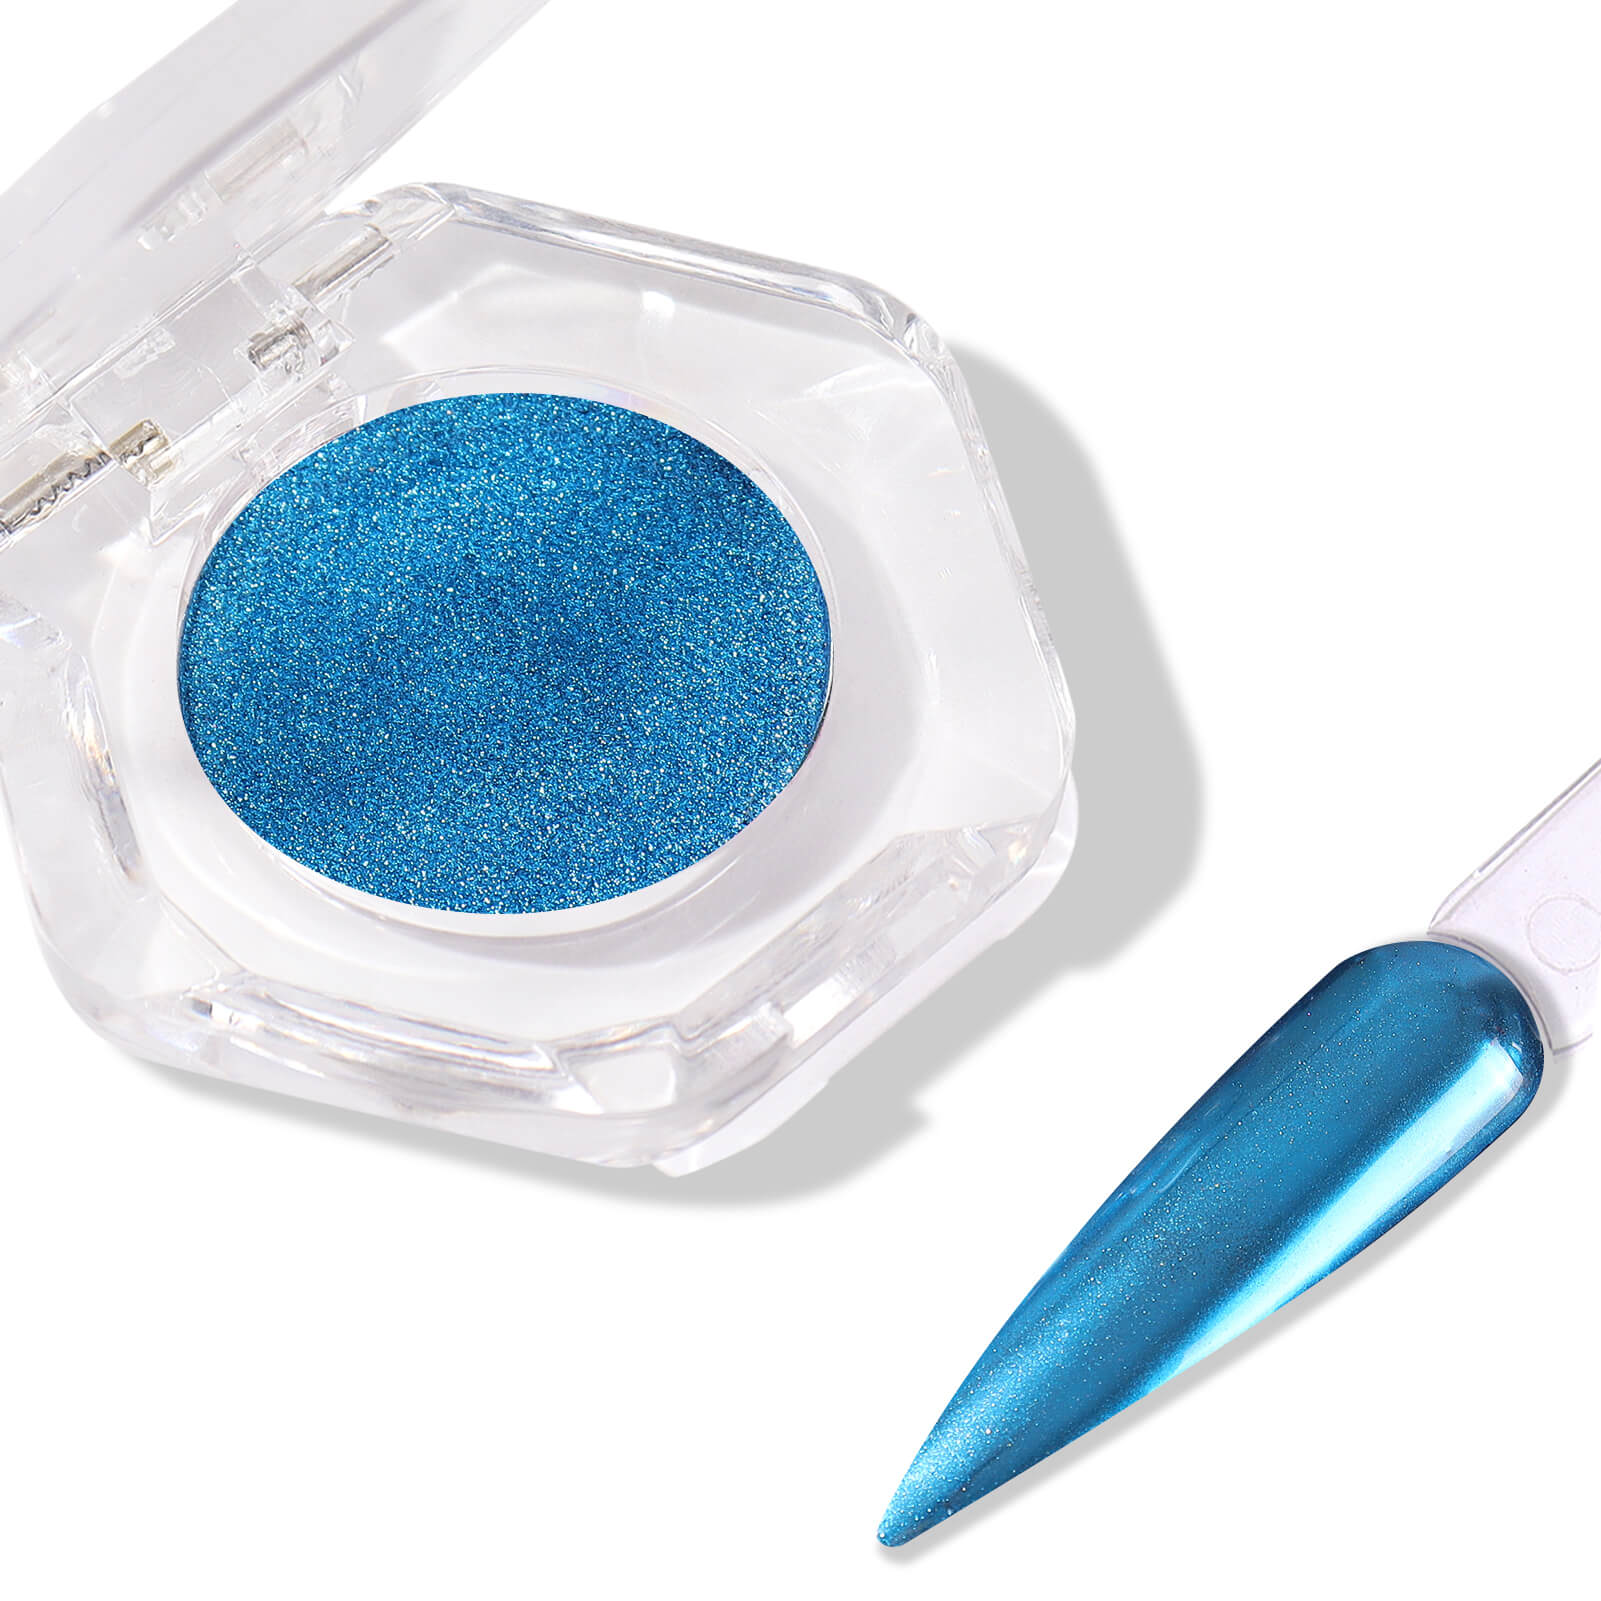 Vettsy Nail Art Chrome Powder-Blue Mirror Nails